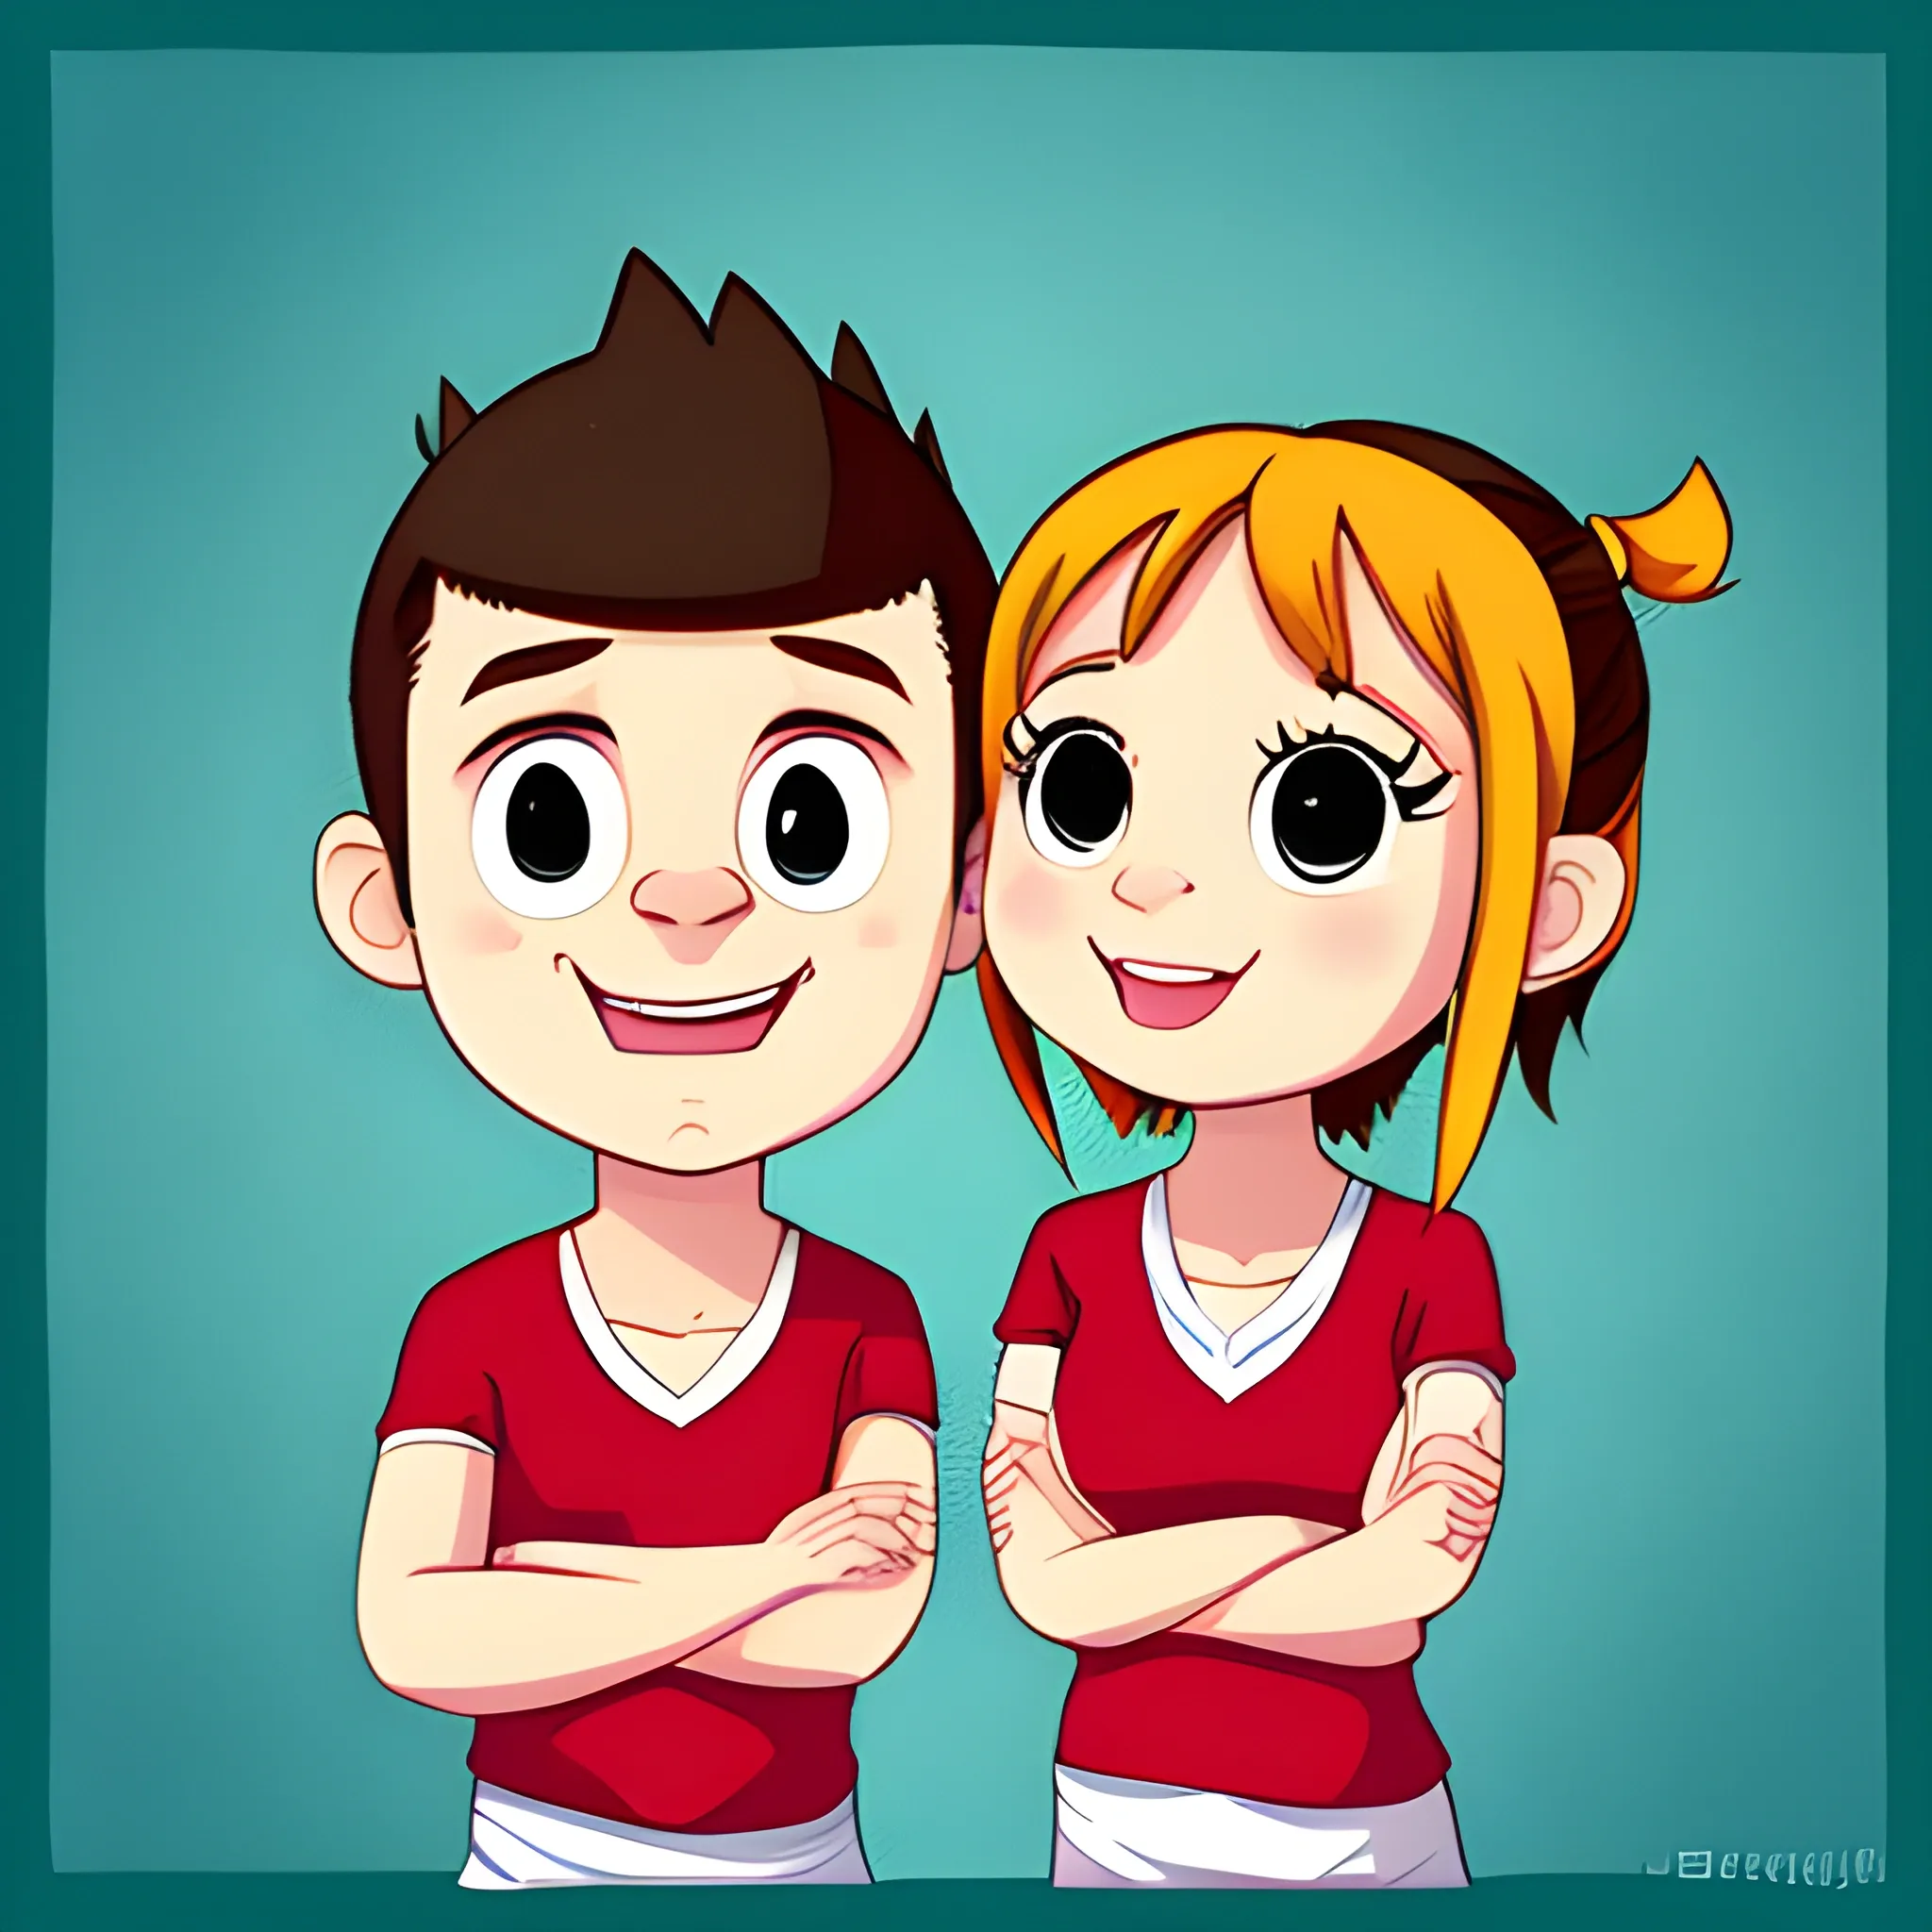 Couple avatar, cute and cartoonish